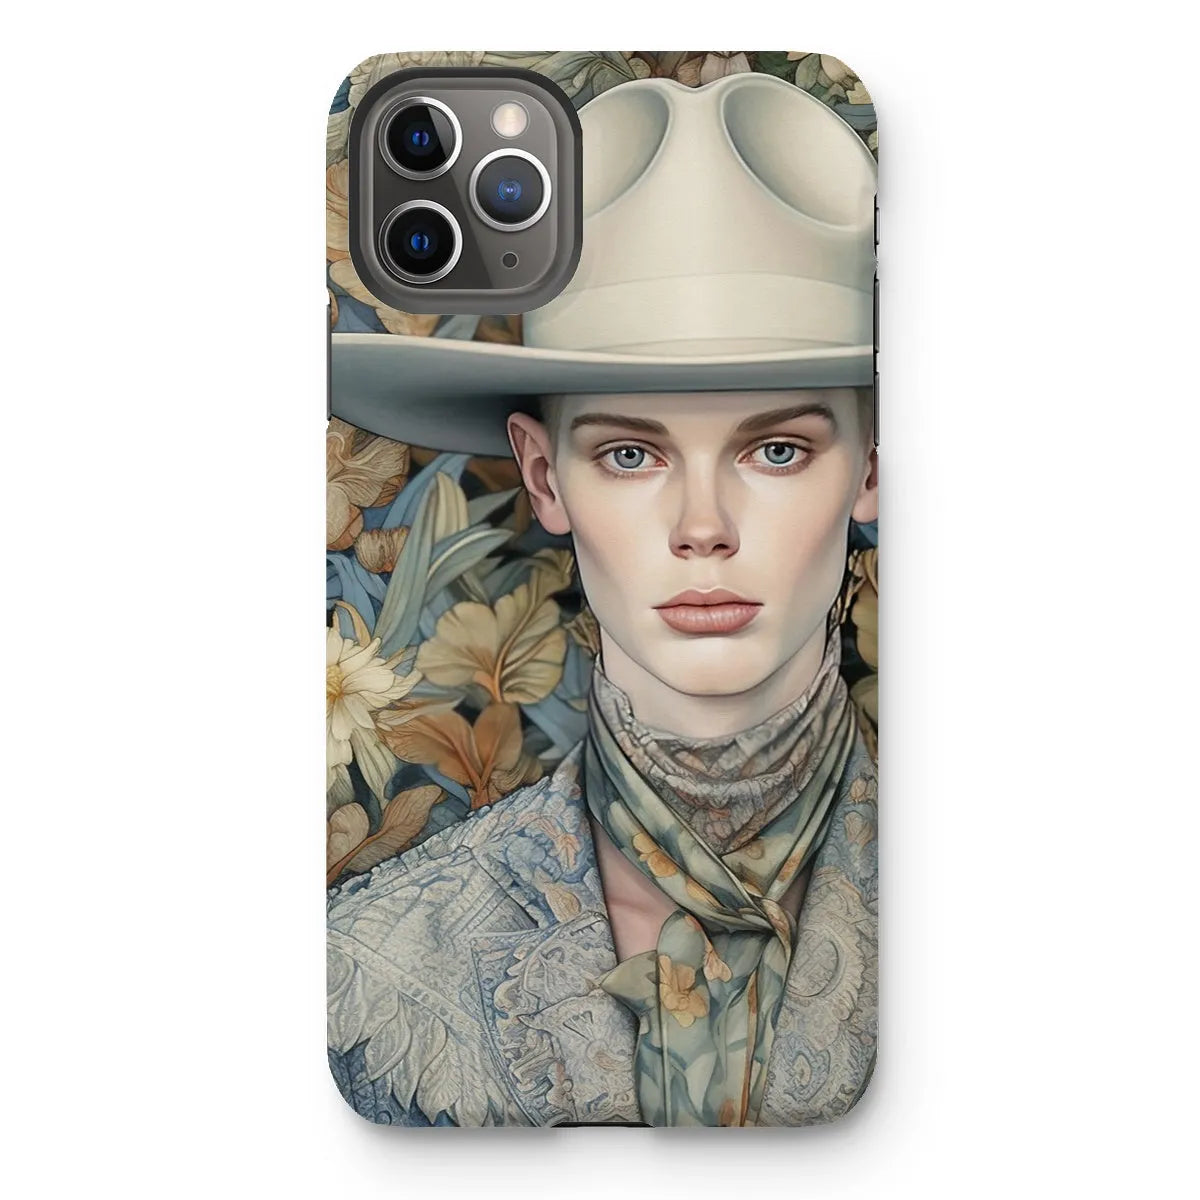 Jasper - Dandy Twink Cowboy Aesthetic Art Phone Case - Iphone 11 Pro Max / Matte - Mobile Phone Cases - Aesthetic Art